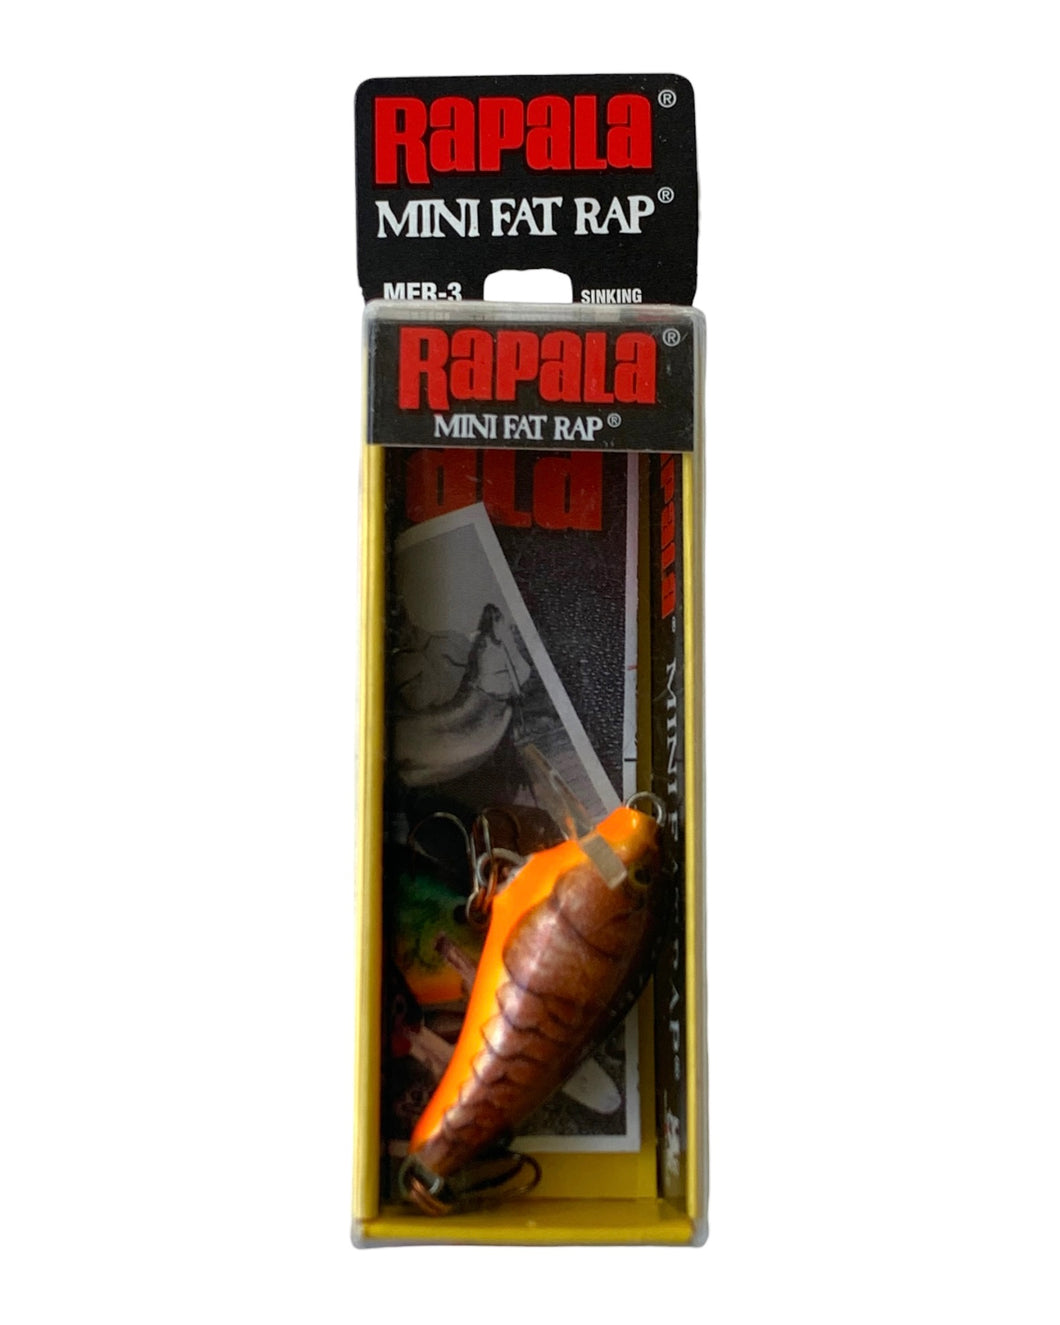 RAPALA Mini Fat Rap MFR-3 BCW Fishing Lure • BROWN CRAWDAD – Toad